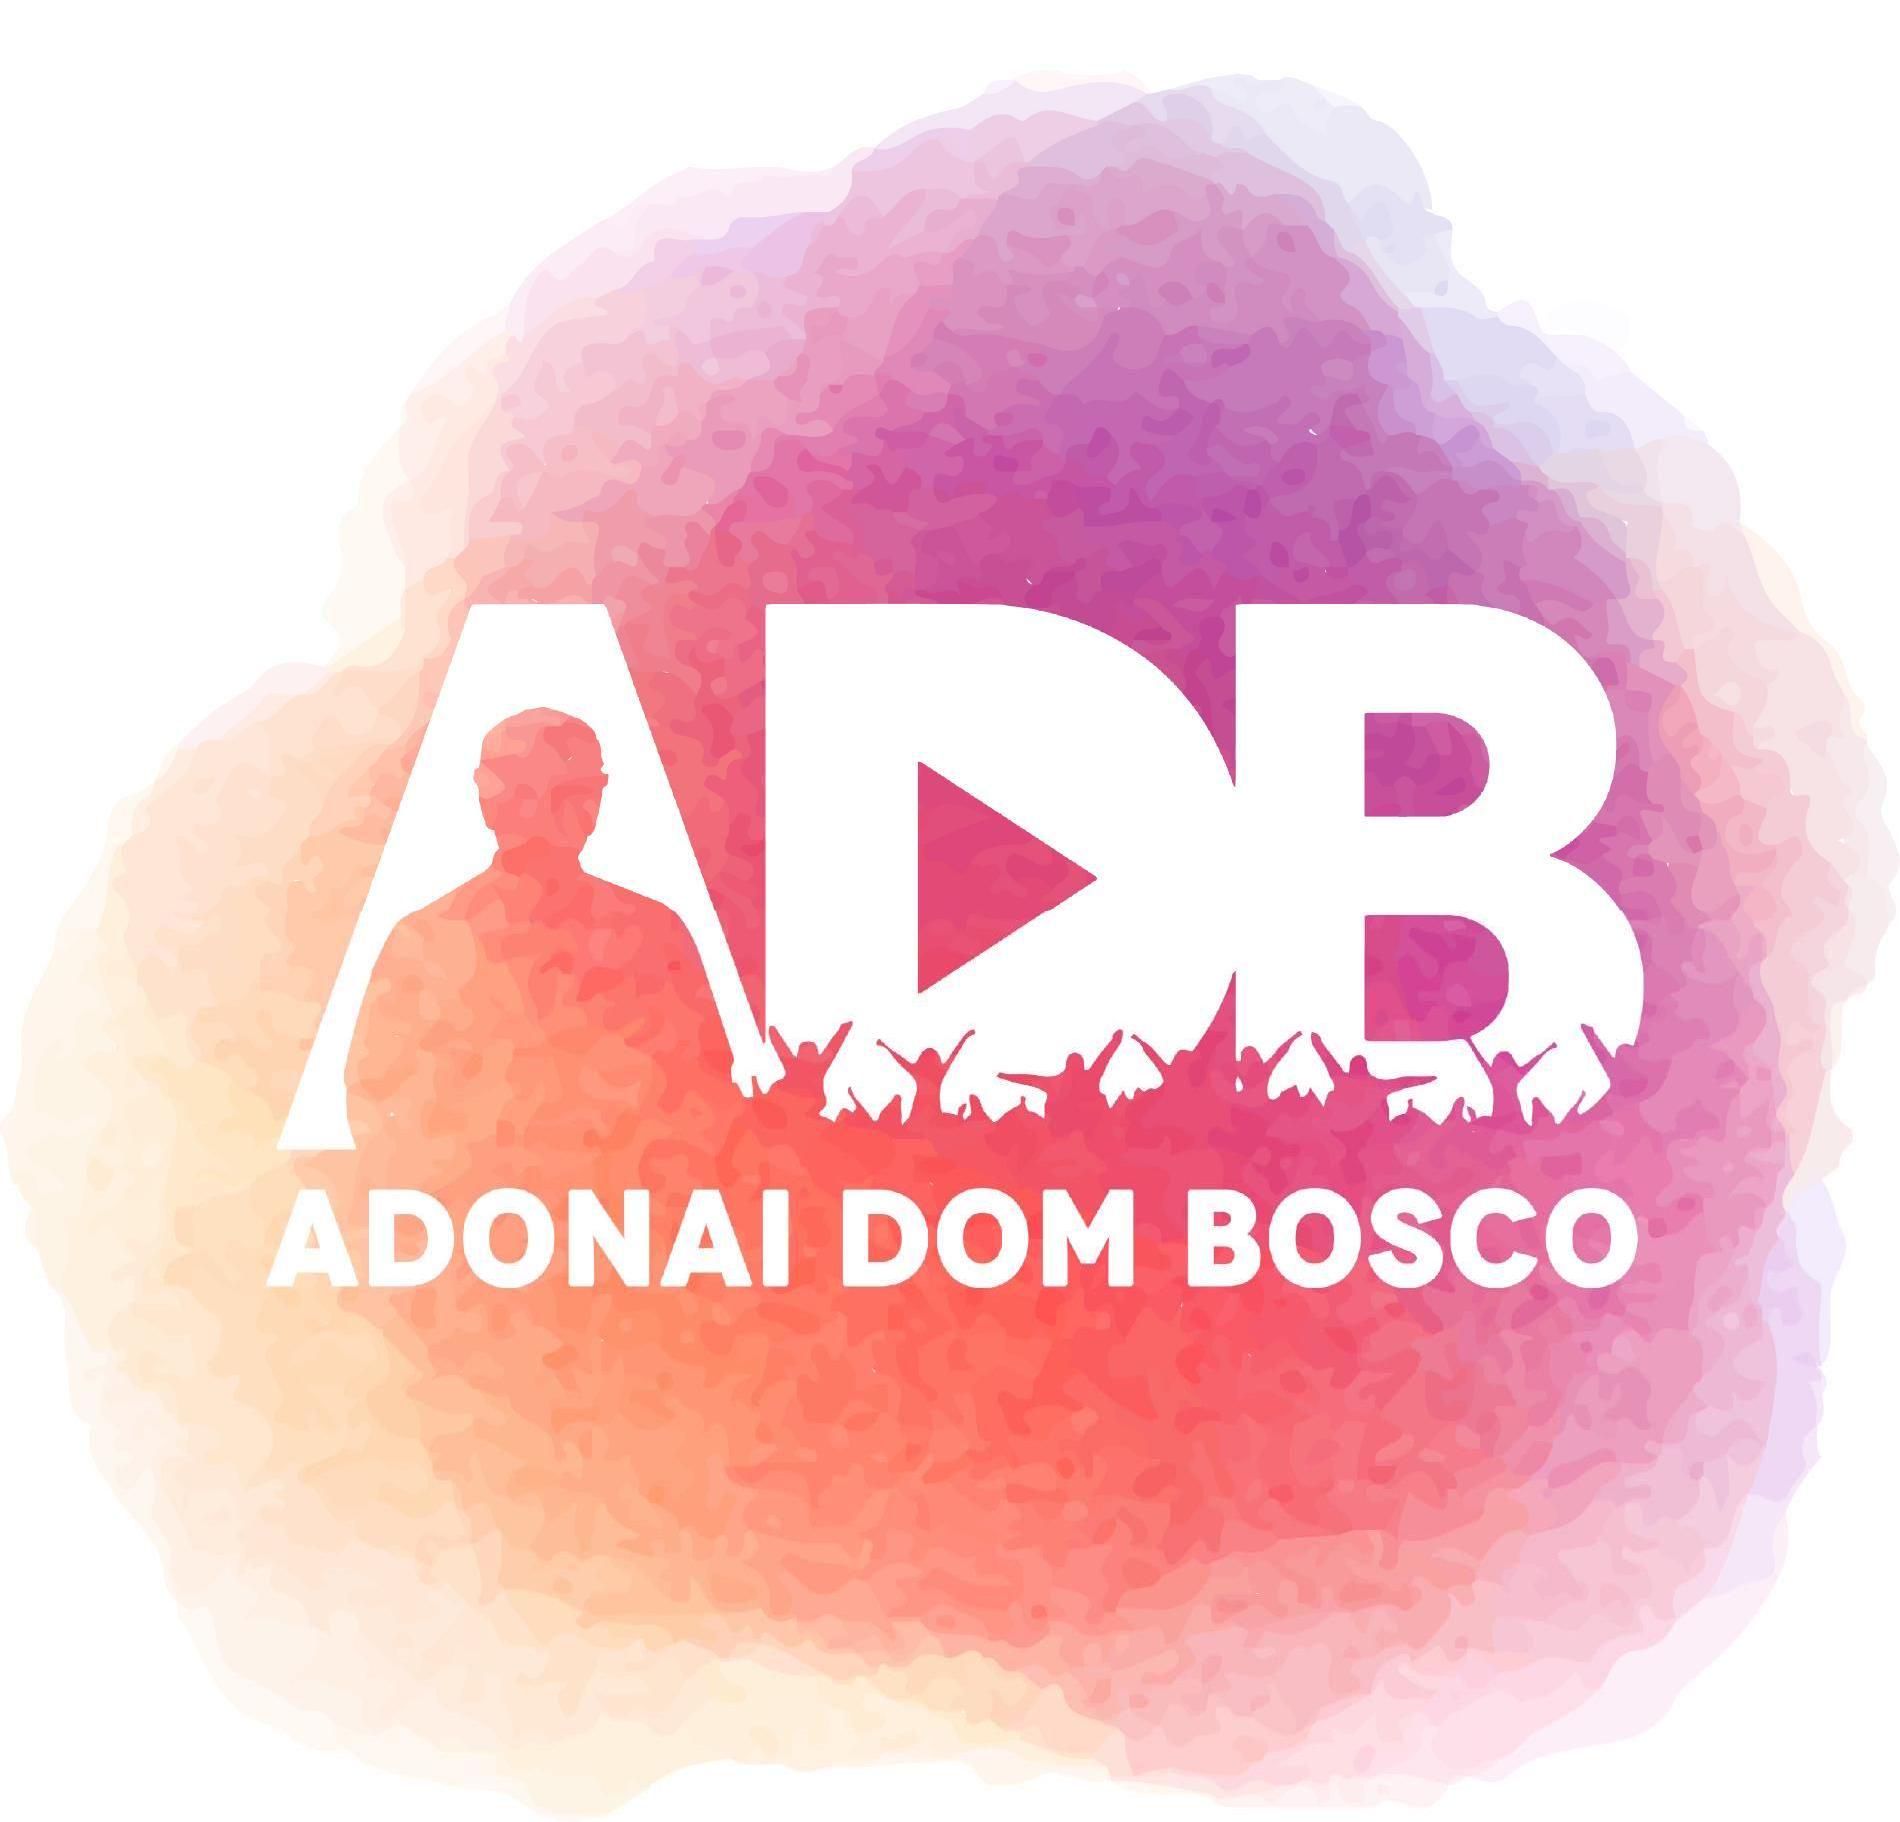 Adonai Dom Bosco